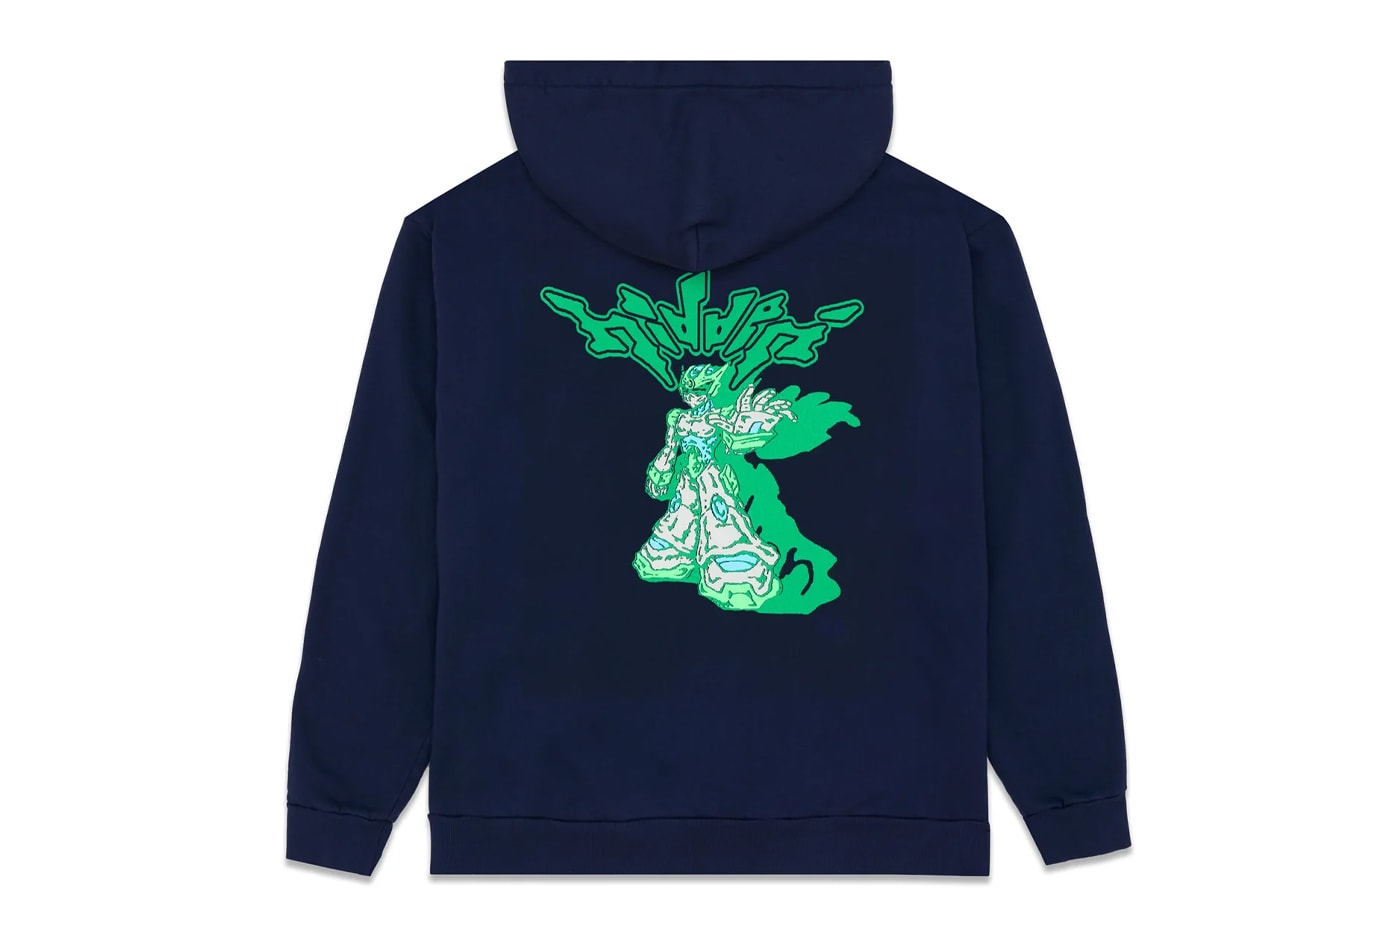 Newest HIDDEN.NY Drop Focuses on Essentials second drop t-shirts hoodies camp lake japan grid rampage blue ride mech kid sportscenter hoodie accesories tray bag bum bag